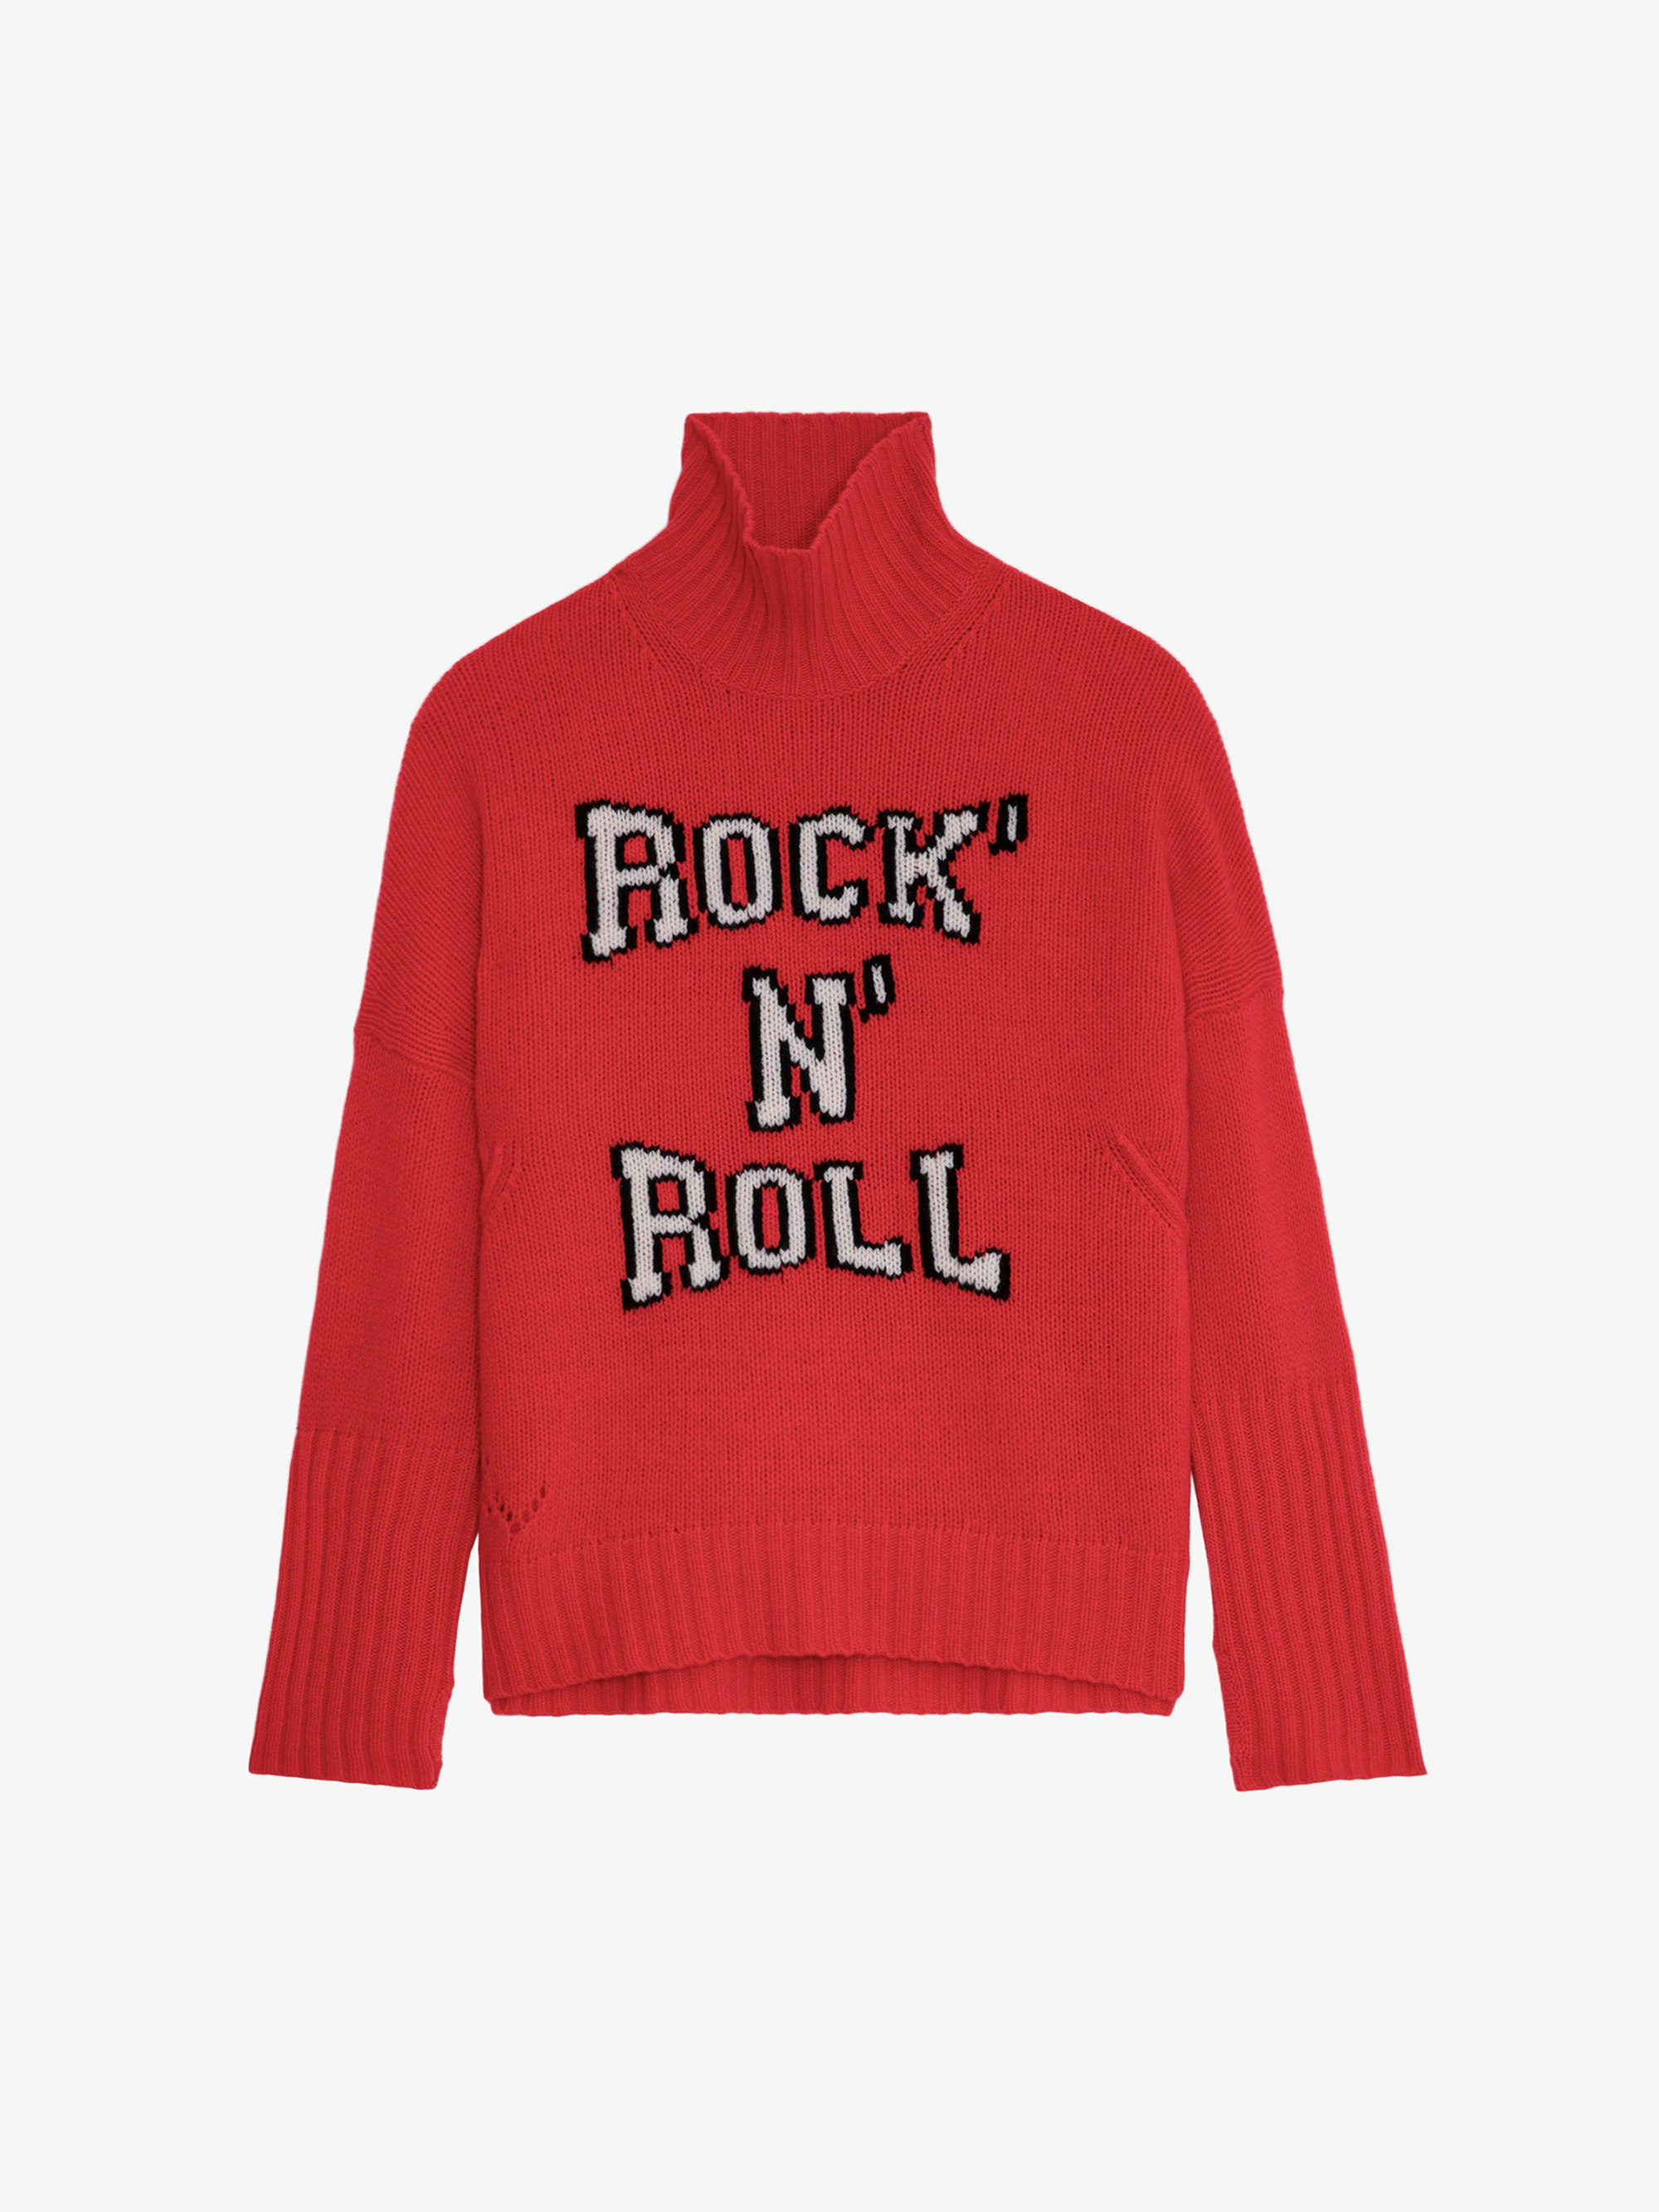 Alma Rock N Roll Jumper - Women’s red merino wool jumper with mock neckline and intarsia jacquard “Rock ‘N’ Roll” slogan.